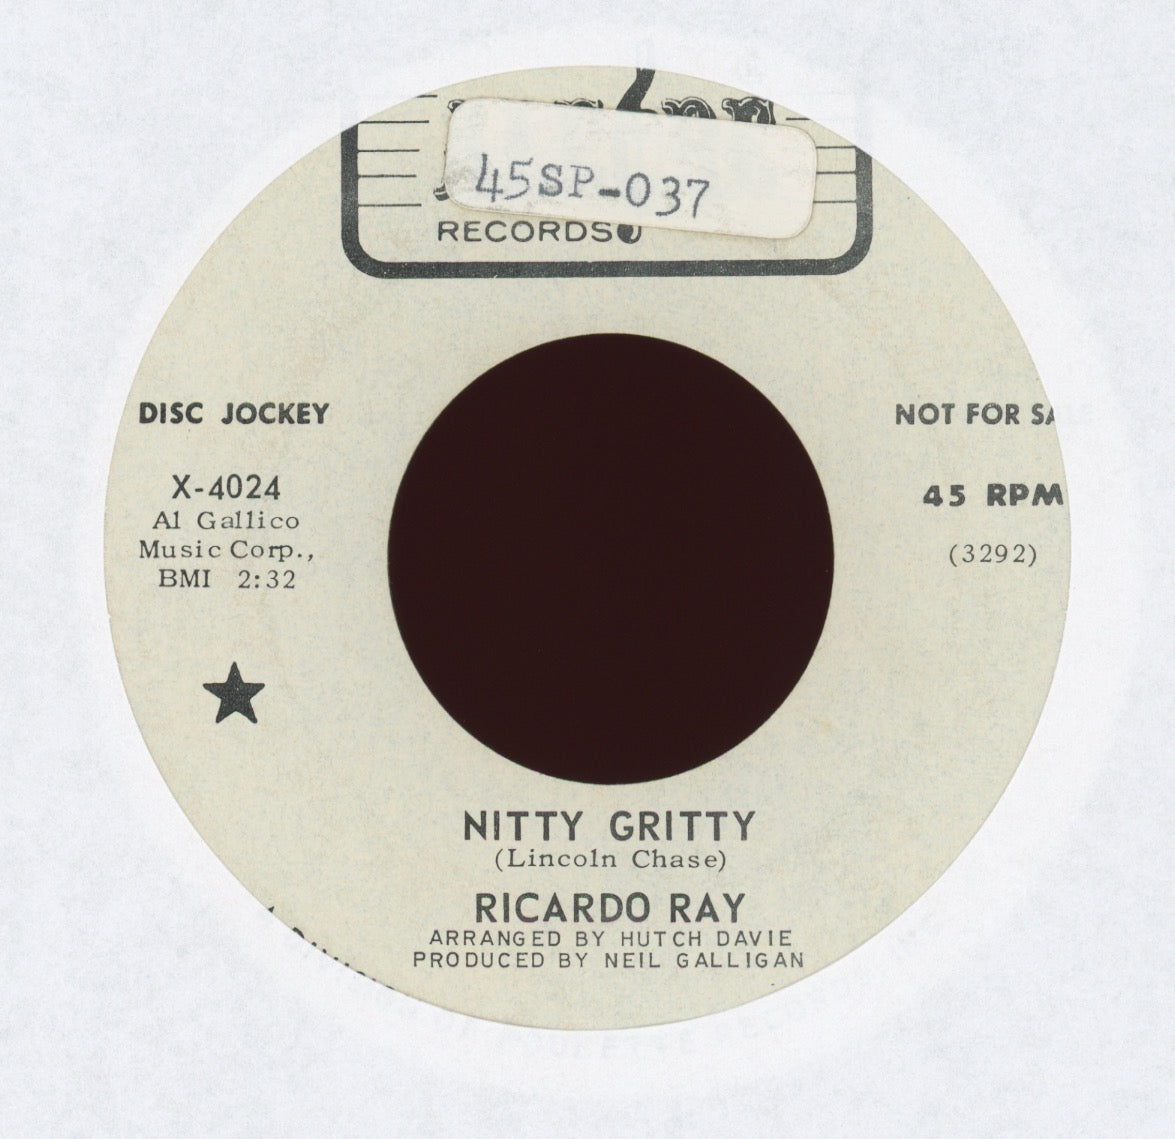 Ricardo Ray - Nitty Gritty on Alegre Promo